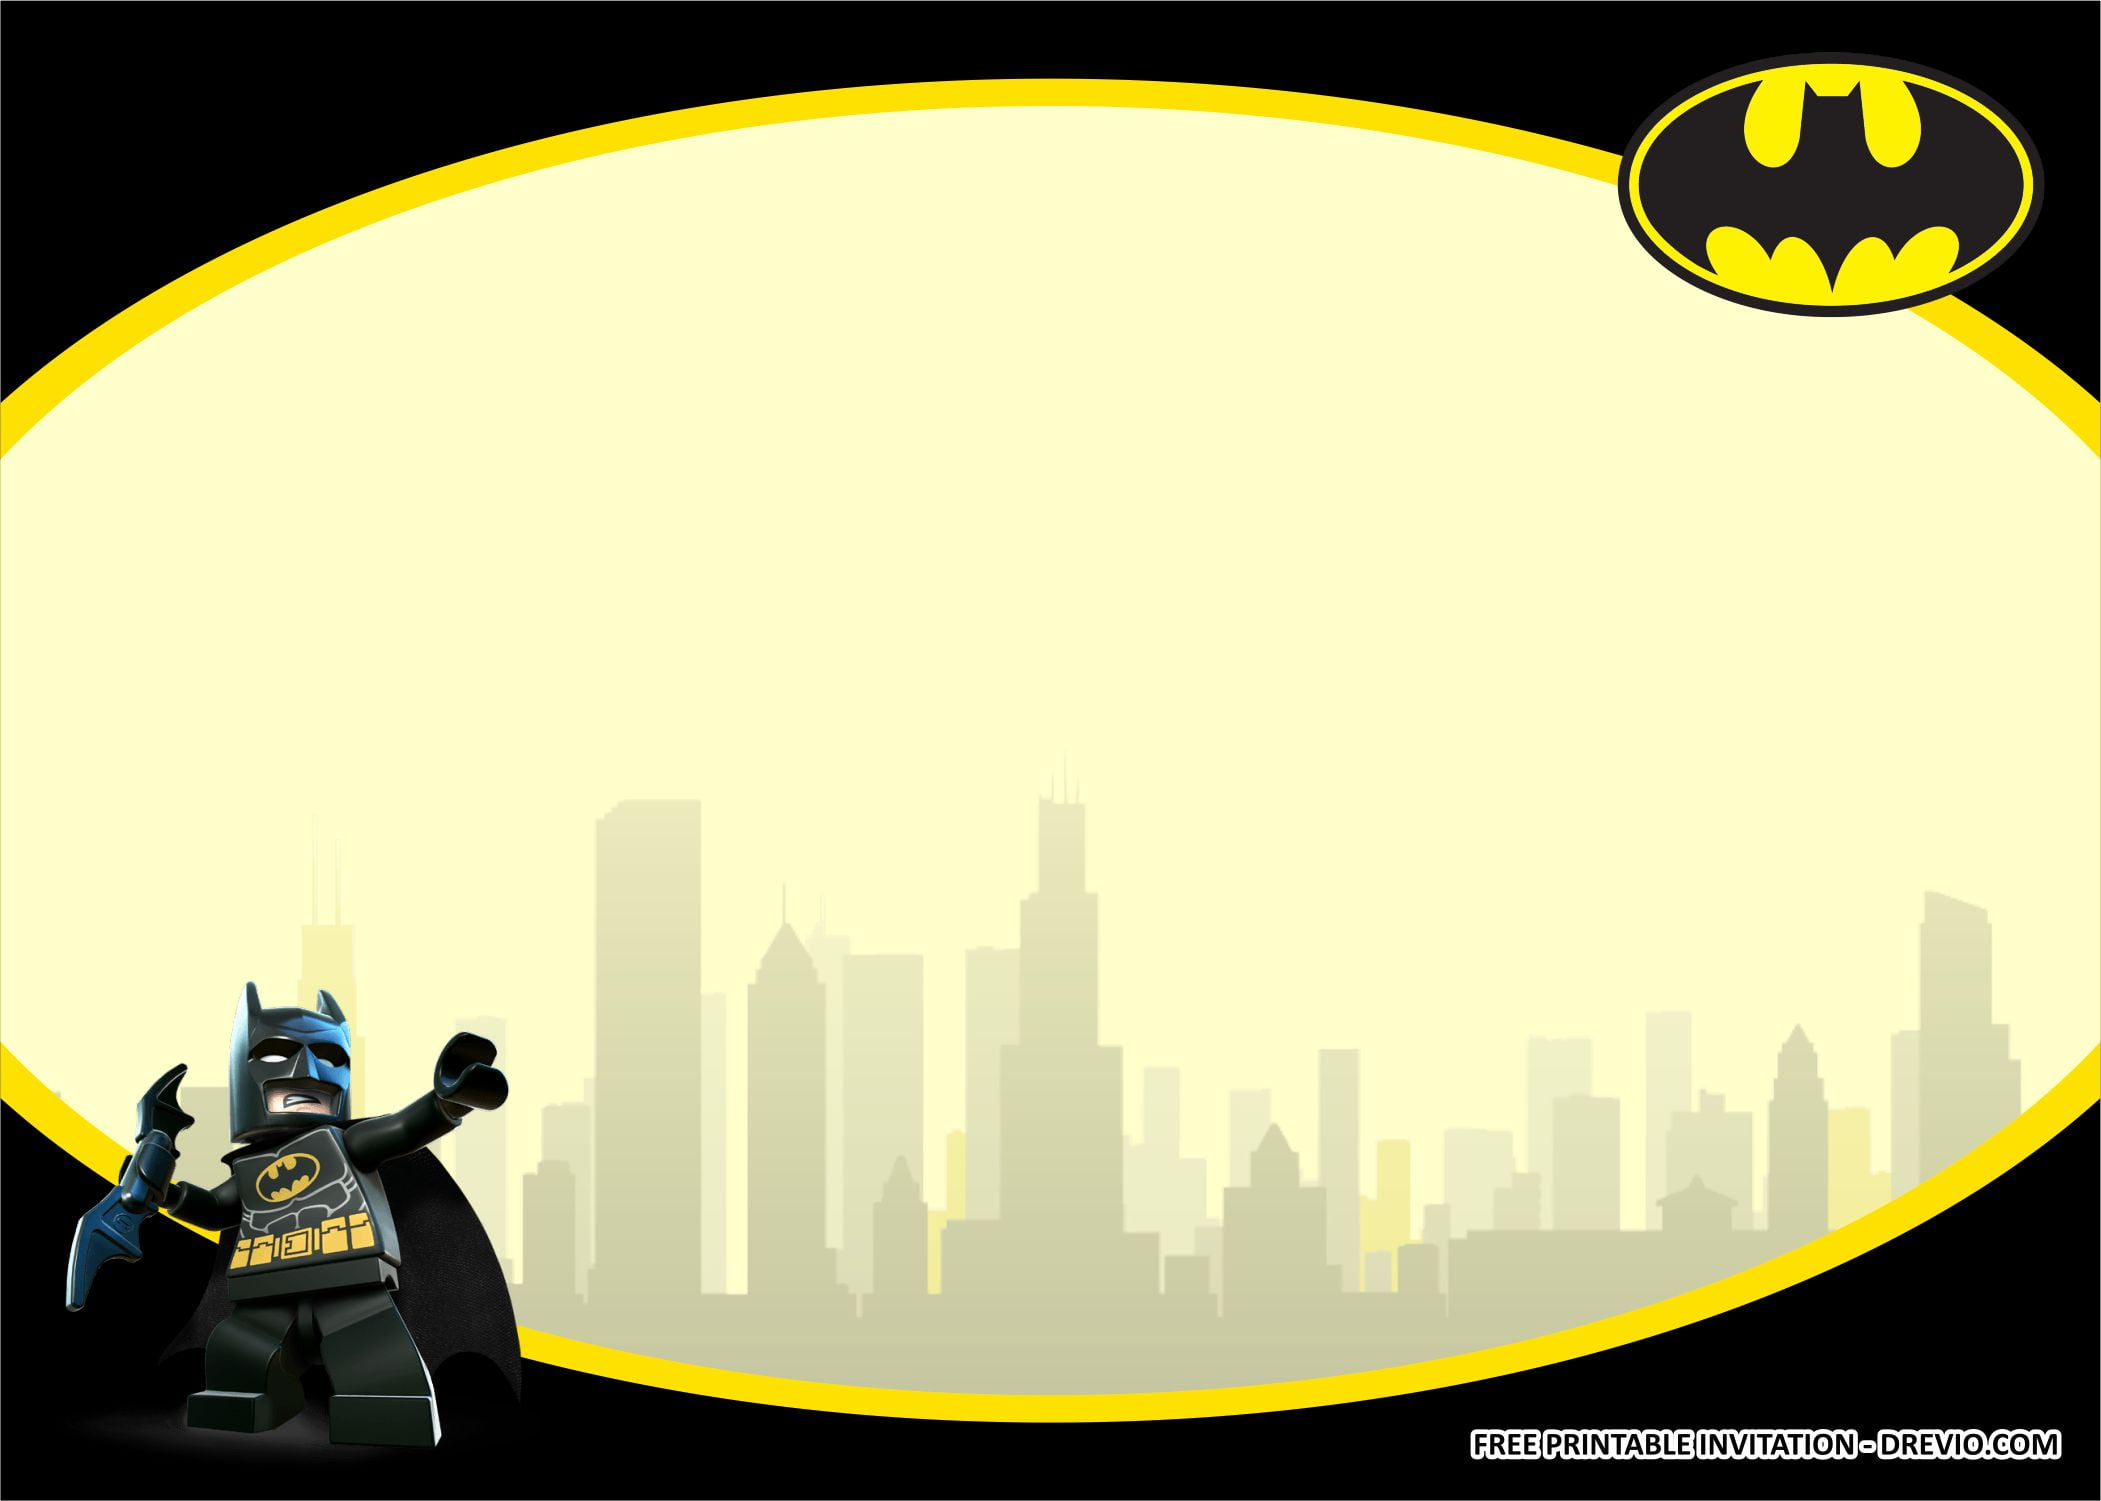 (FREE PRINTABLE) – Lego Batman Birthday Kits Templates | Download